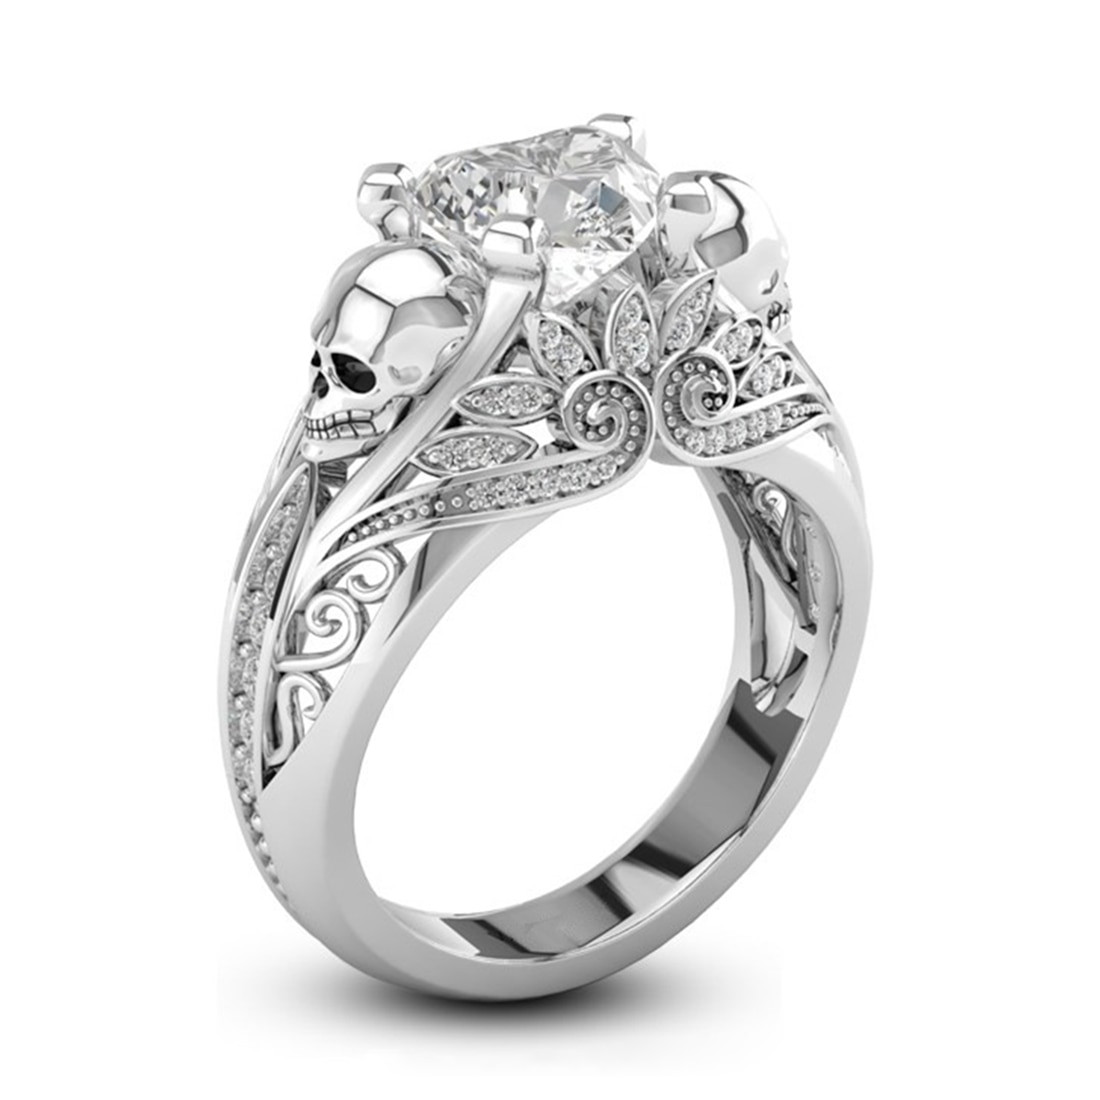 Promise Ring Engagement Ring Wedding Ring
 Heart Shape CZ Stone Silver Punk Skull Promise Ring for